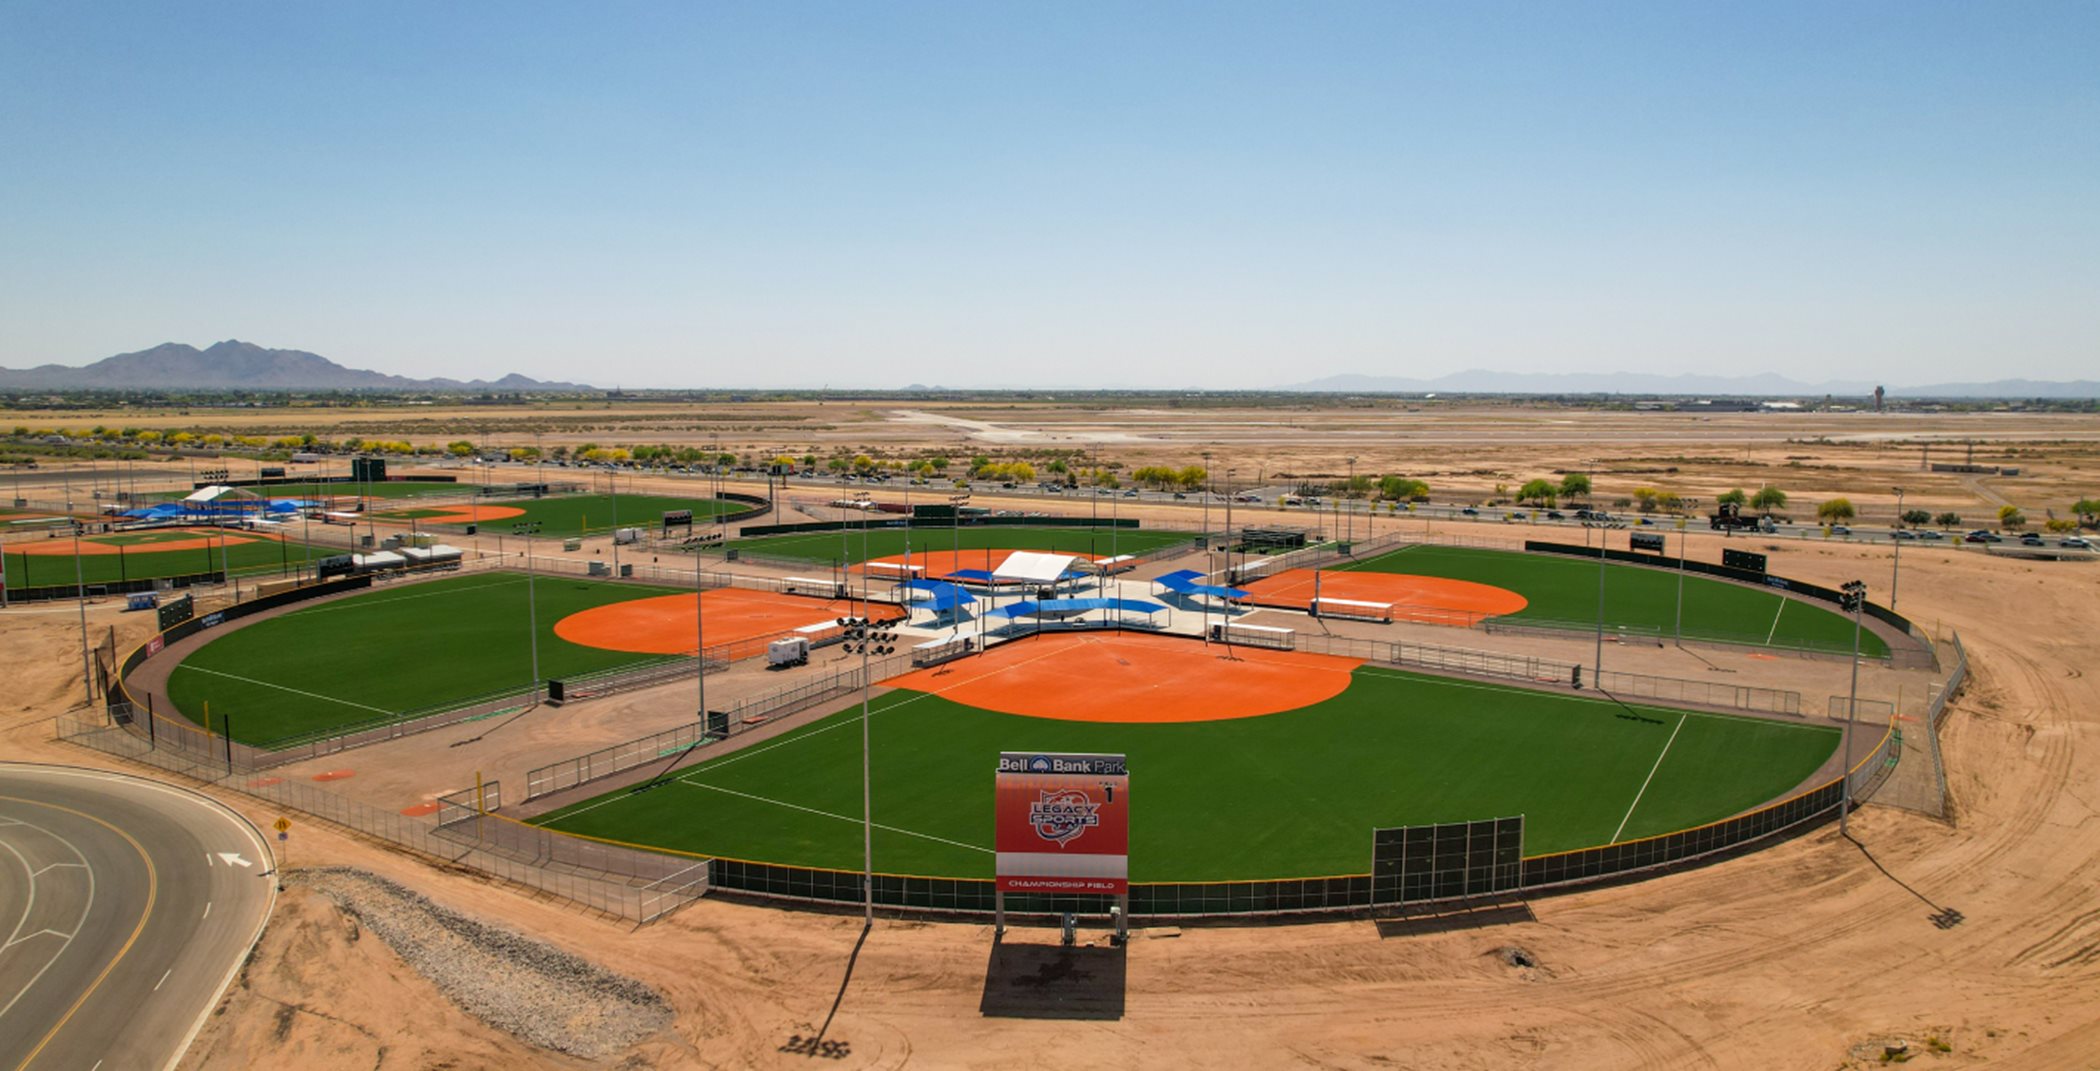 A circular field containing three baseball diamonds